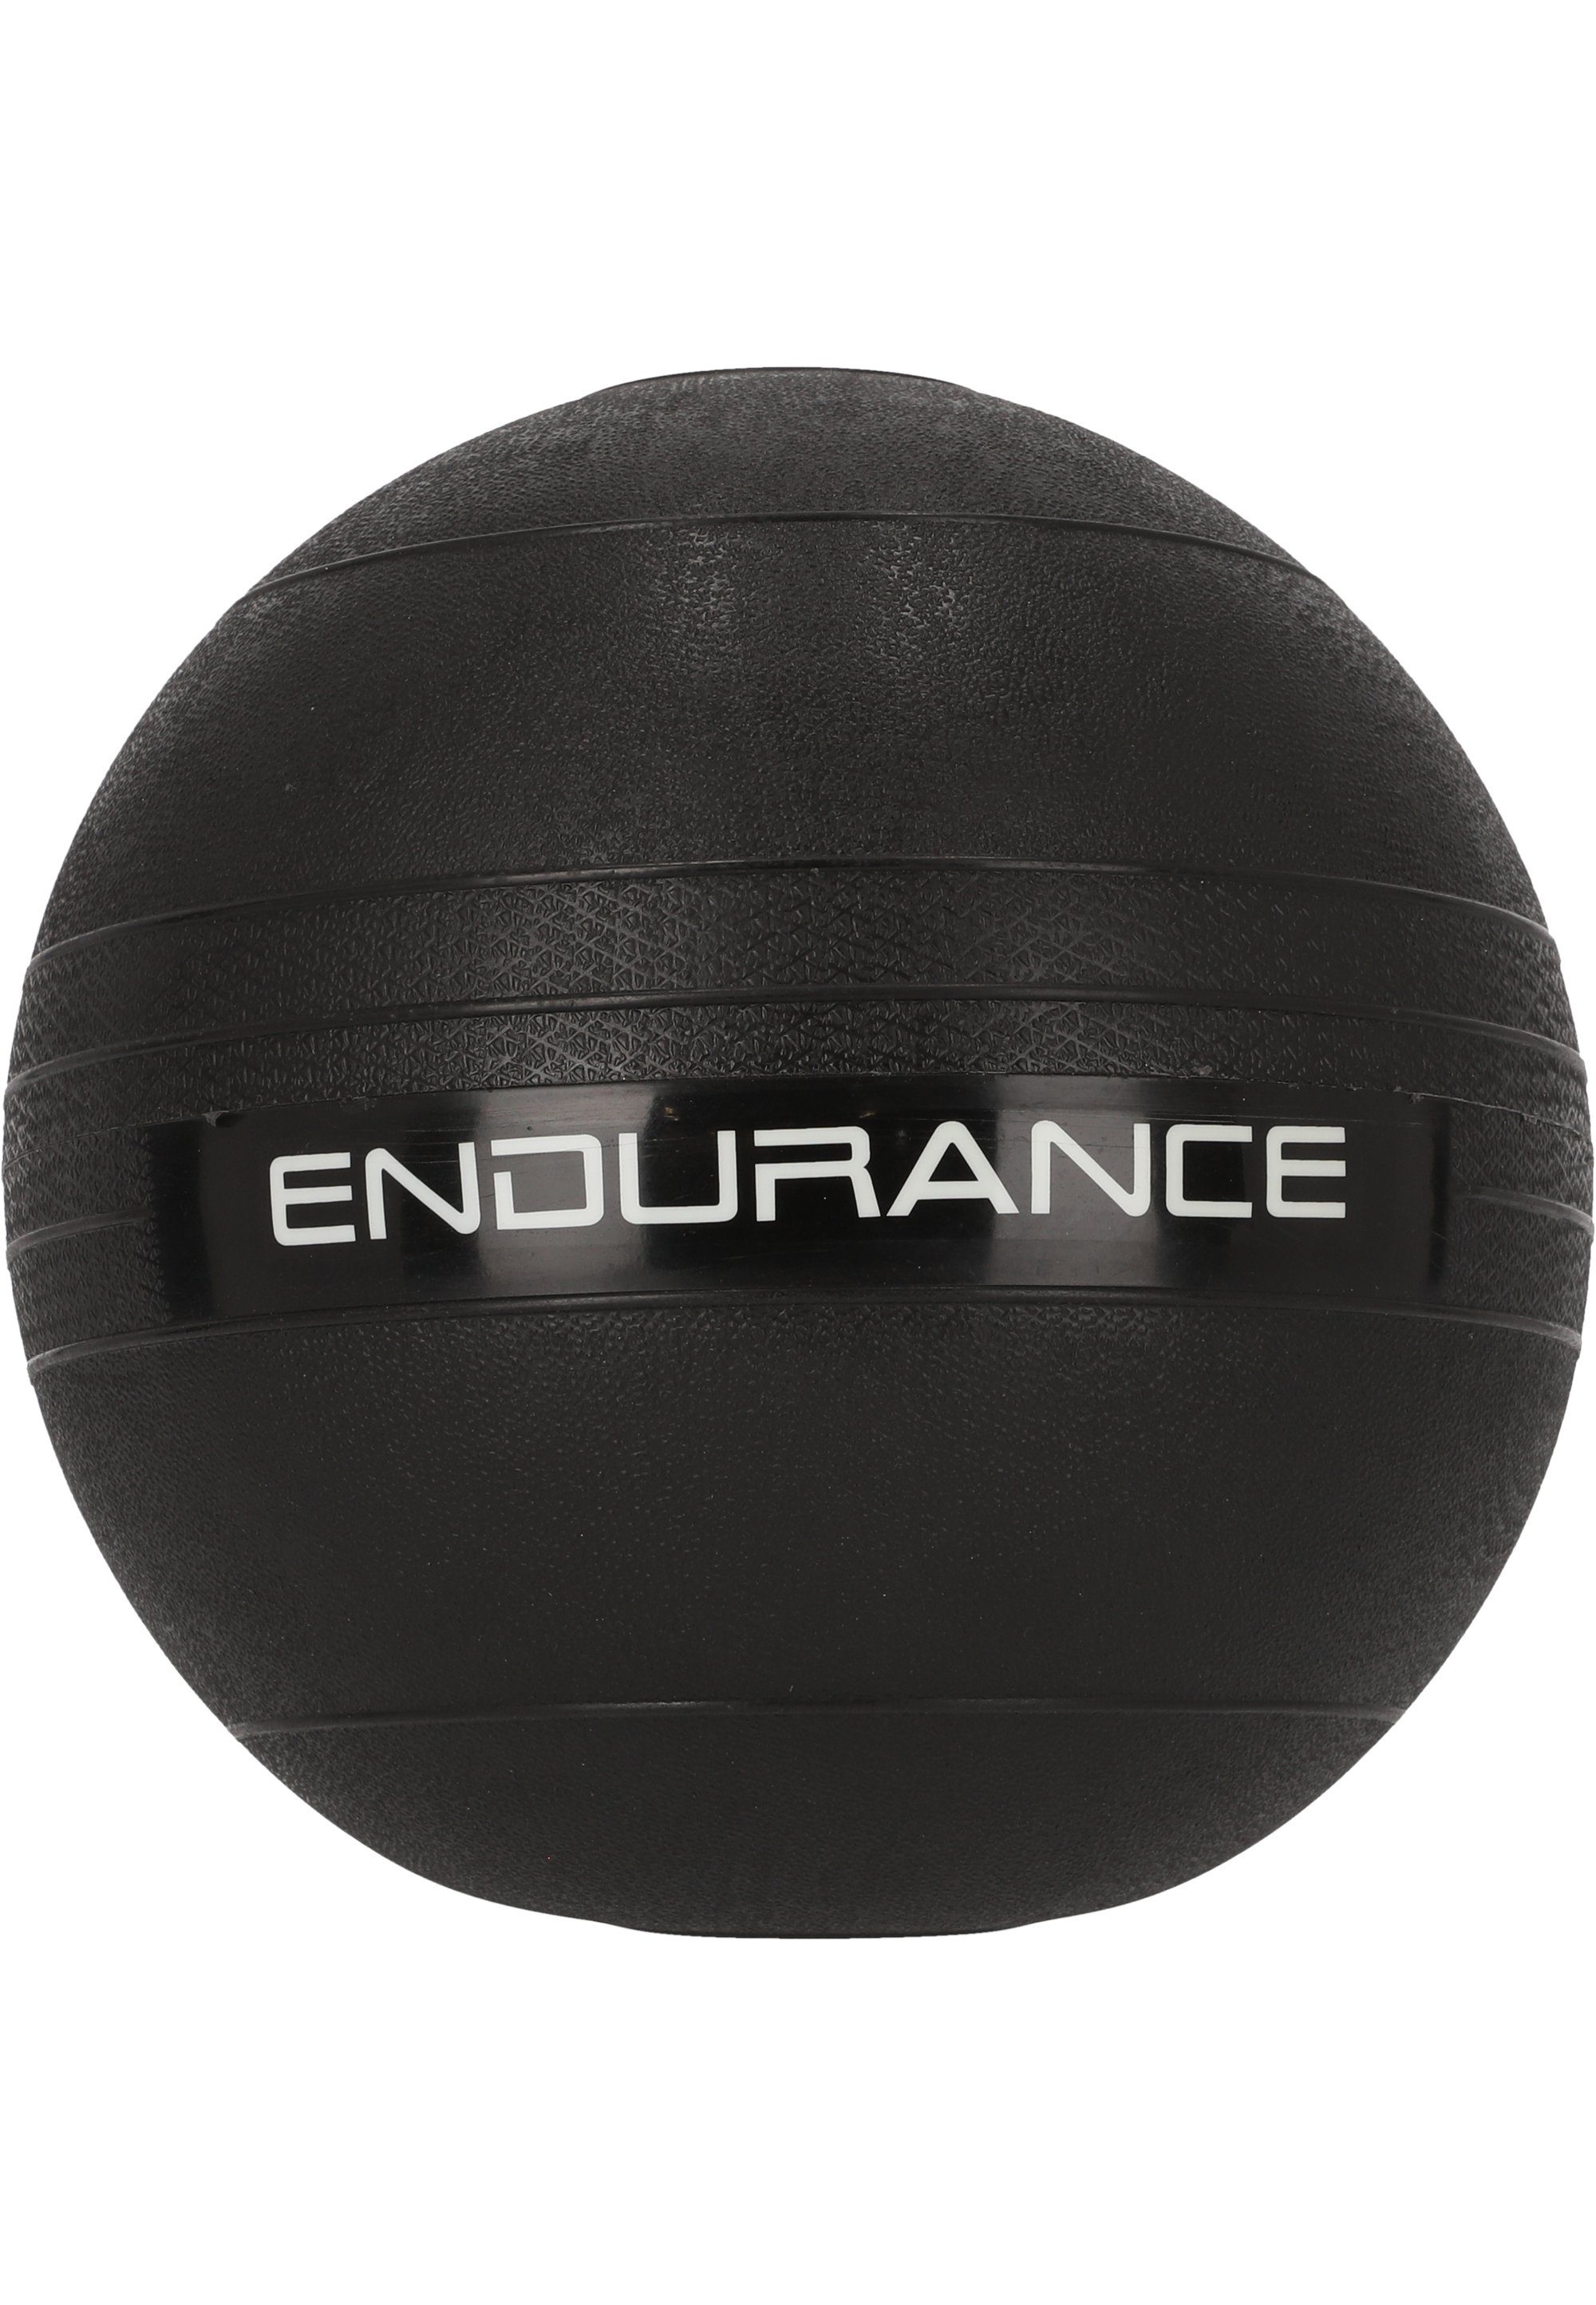 Design einfarbigem Gymnastikball, ENDURANCE in